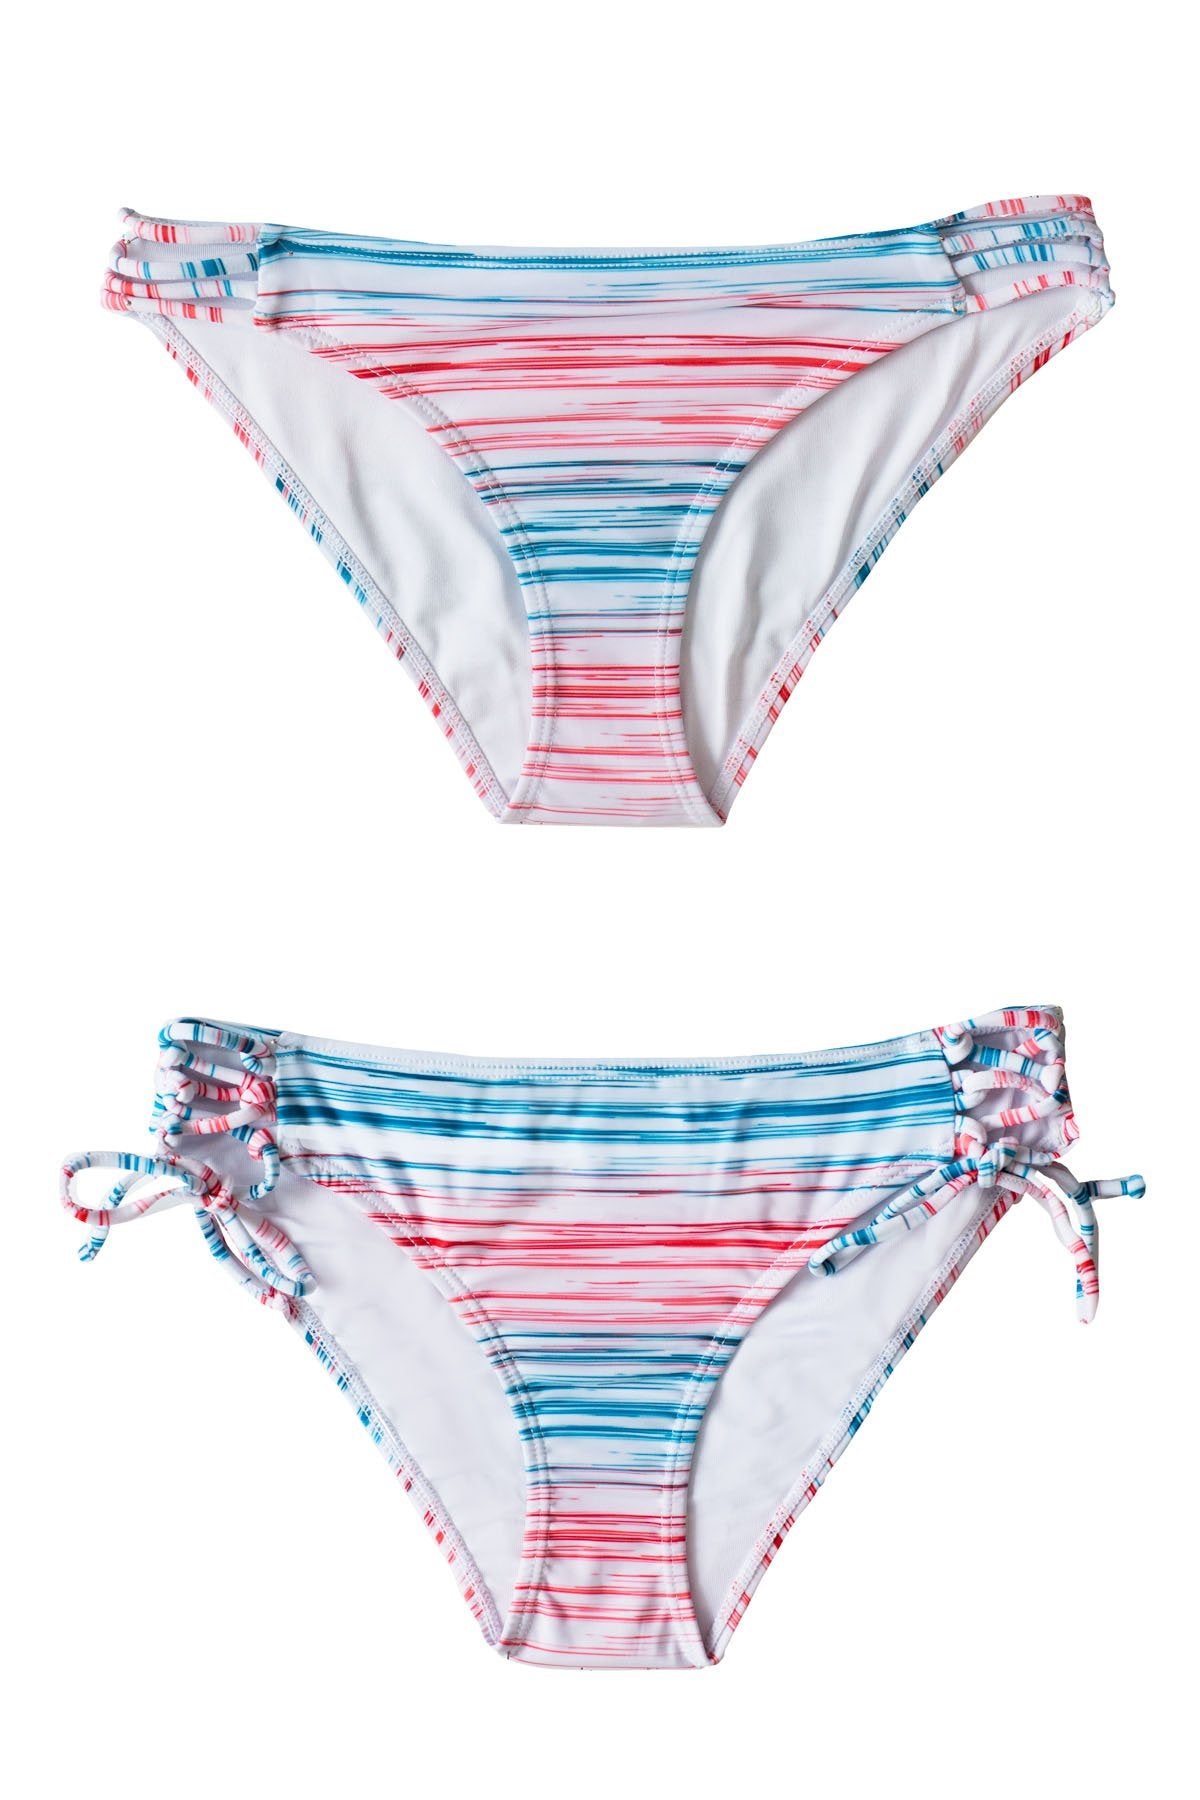 Girls Striped Swimwear Bottoms Size 7-14